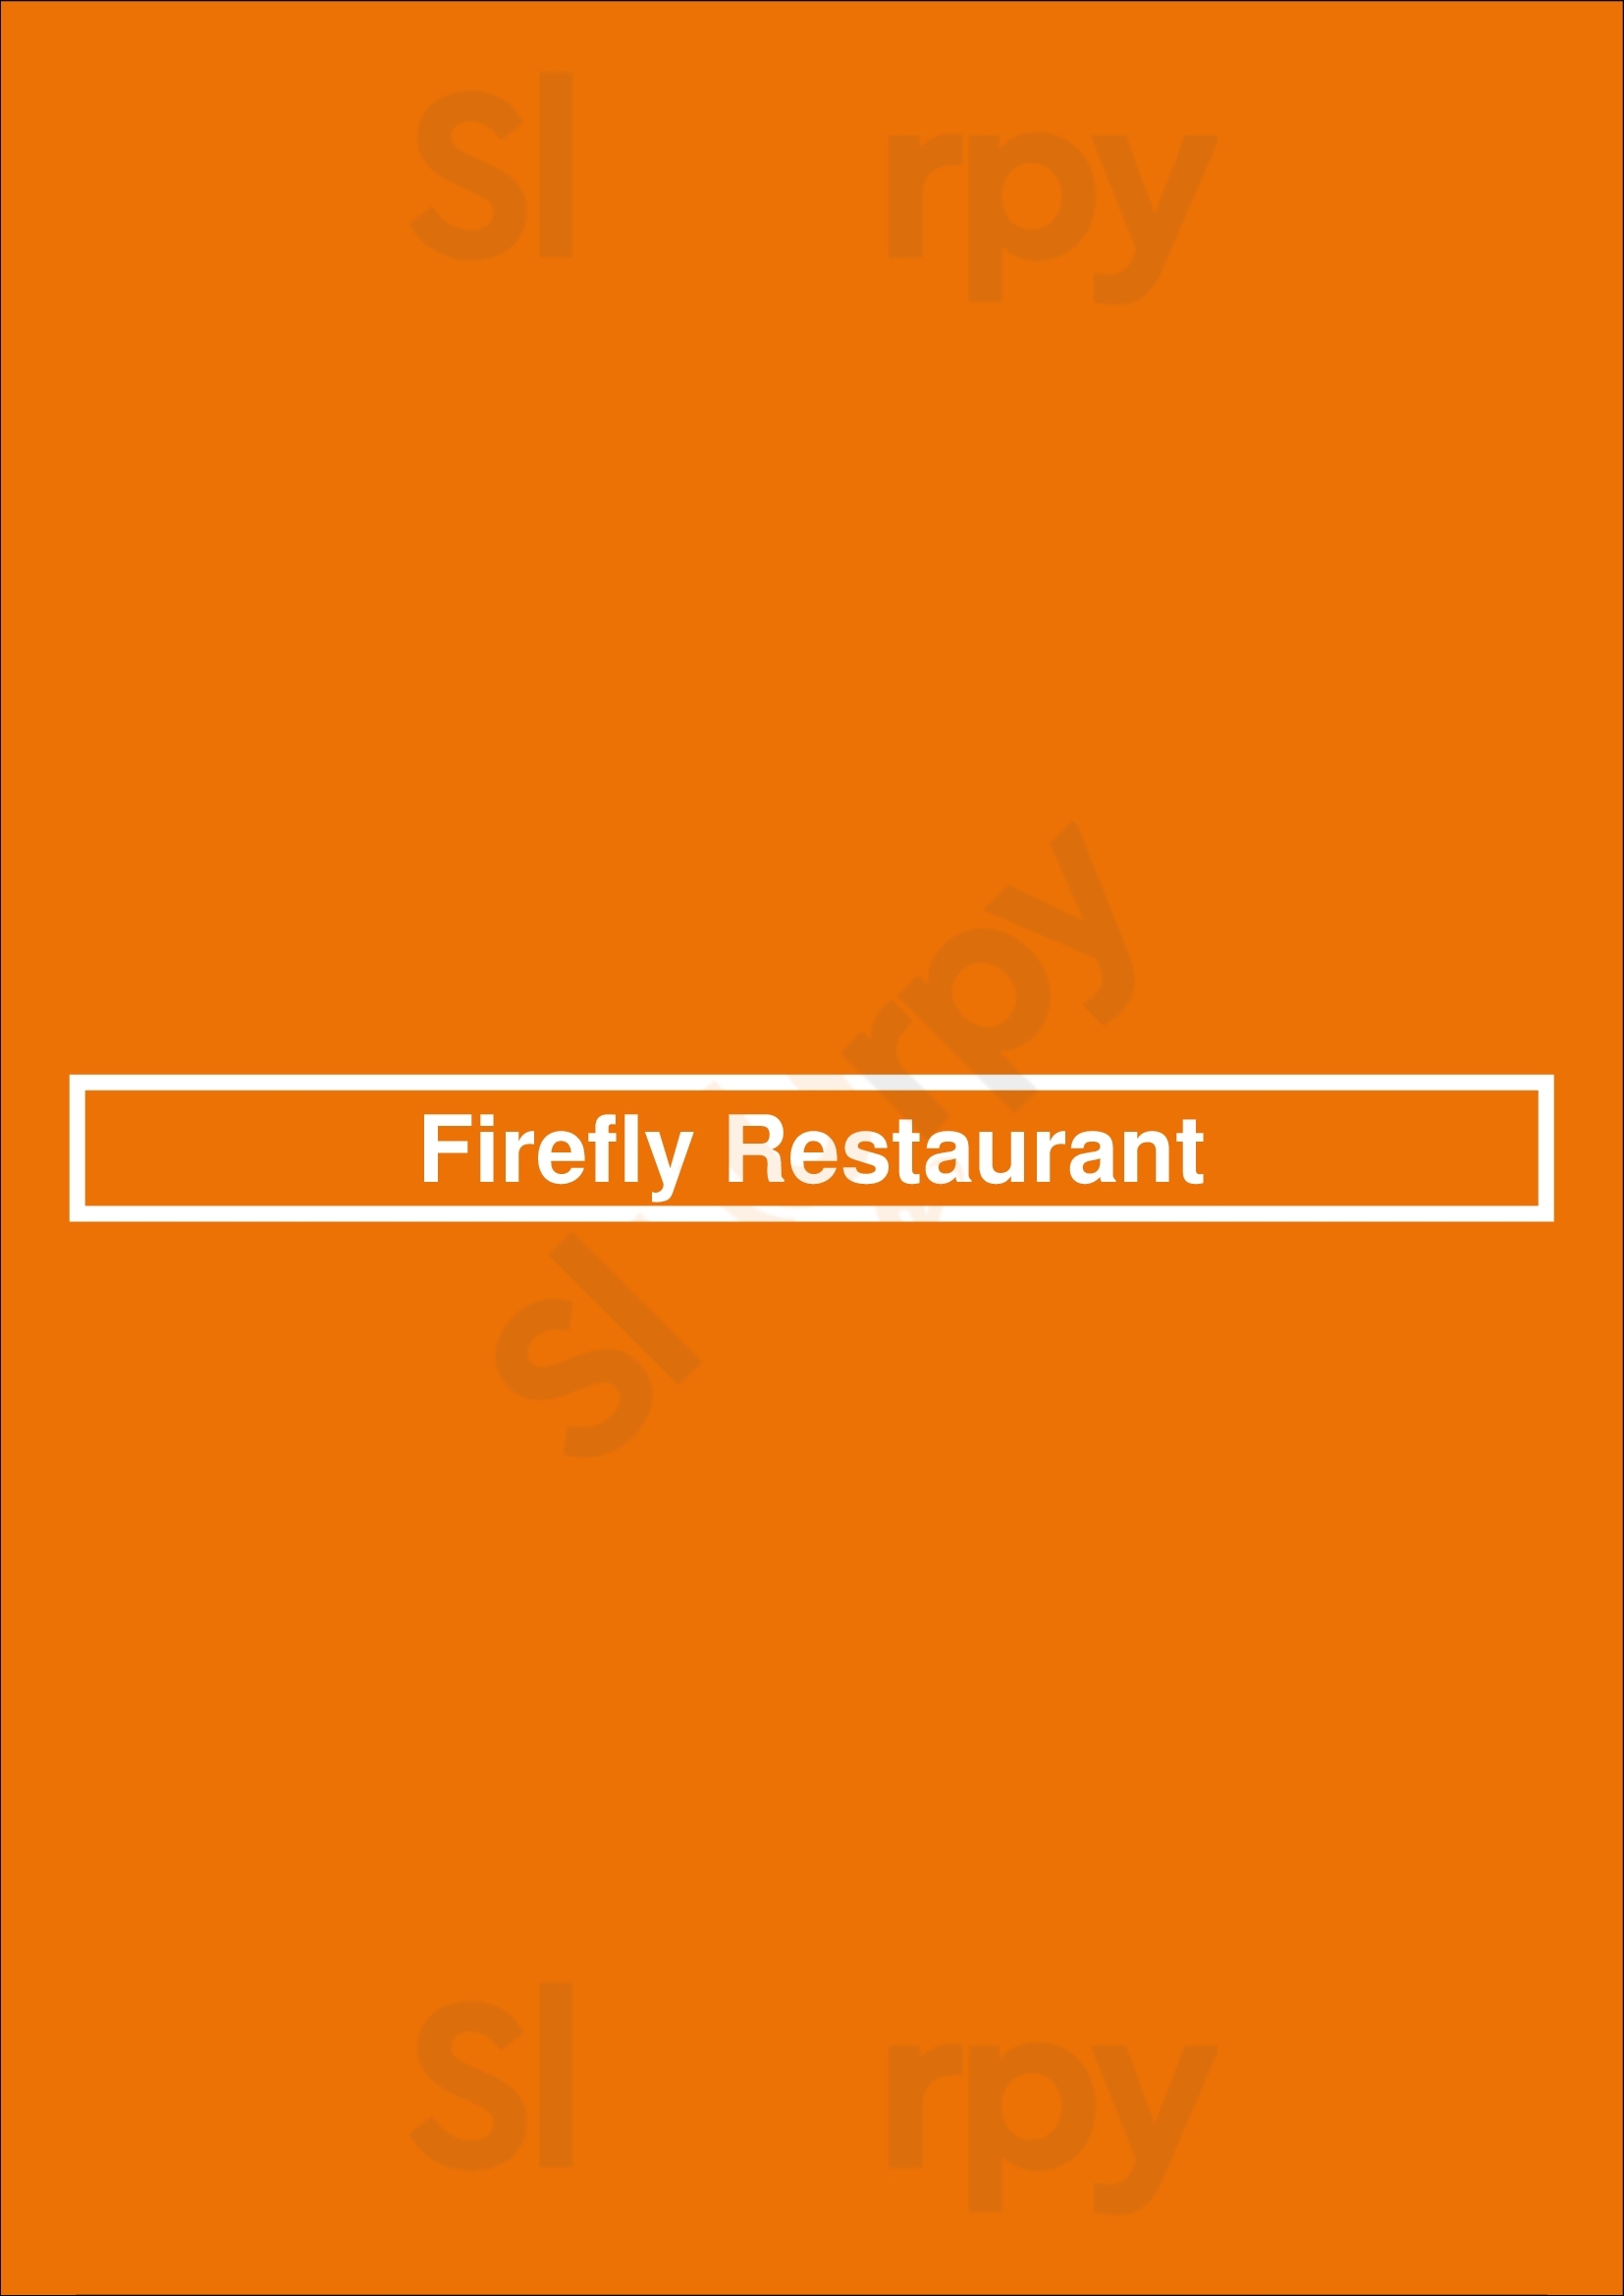 Firefly Restaurant San Francisco Menu - 1